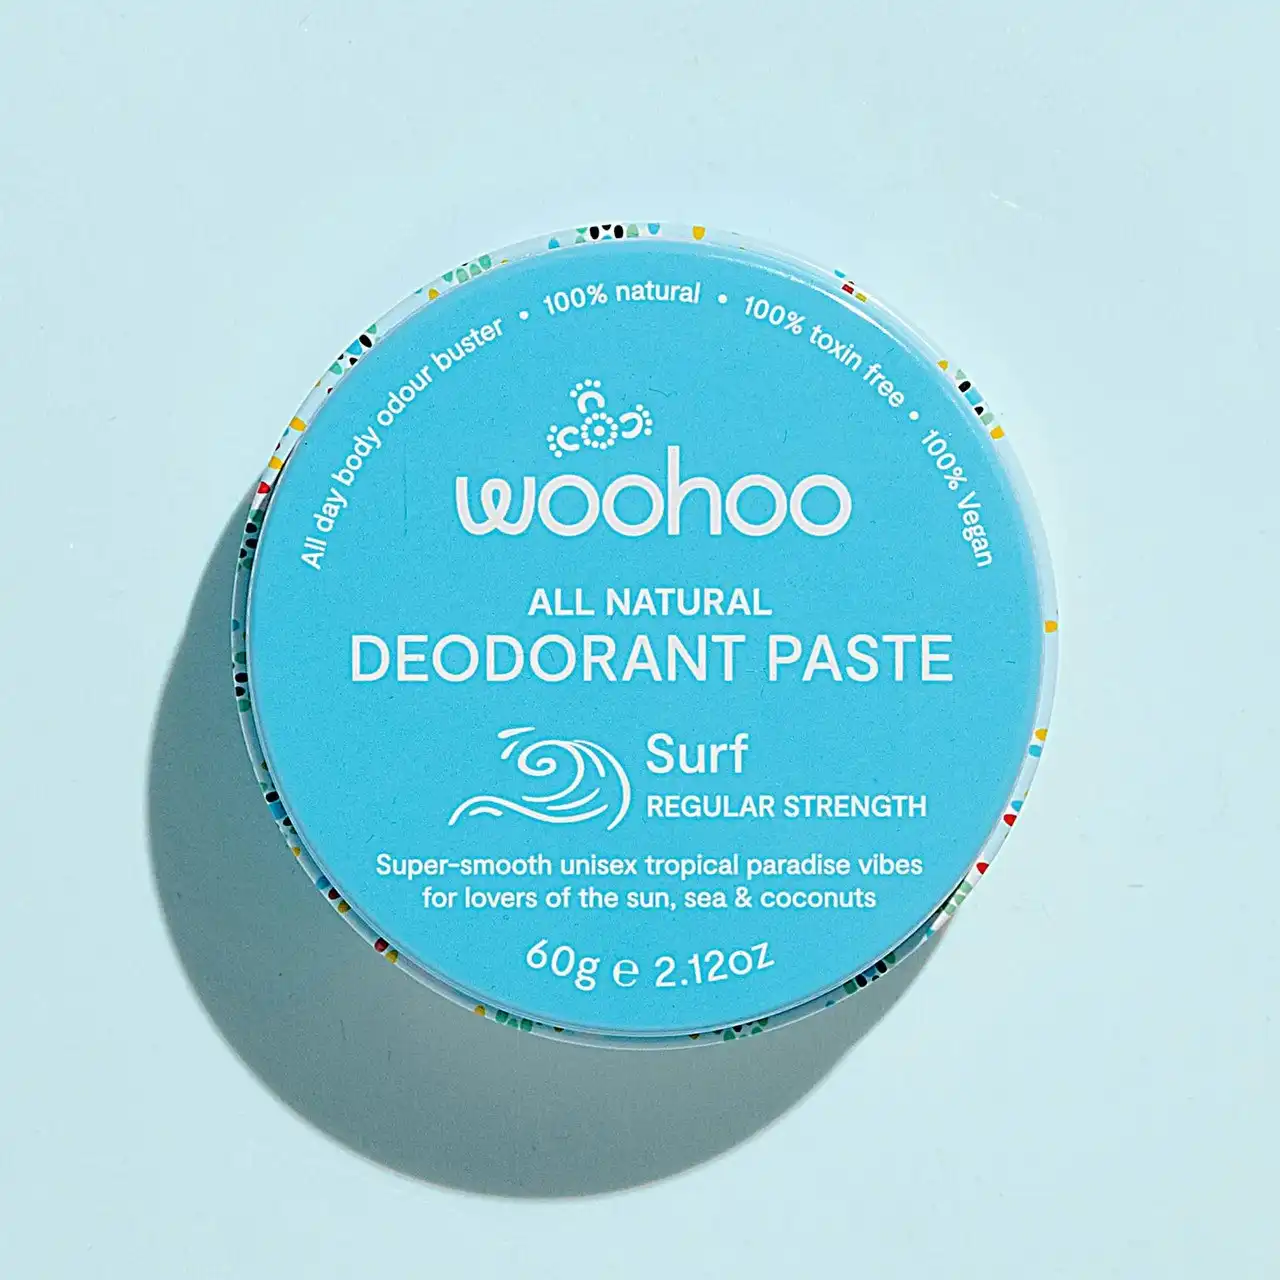 Woohoo All Natural Deodorant Paste Surf 60g